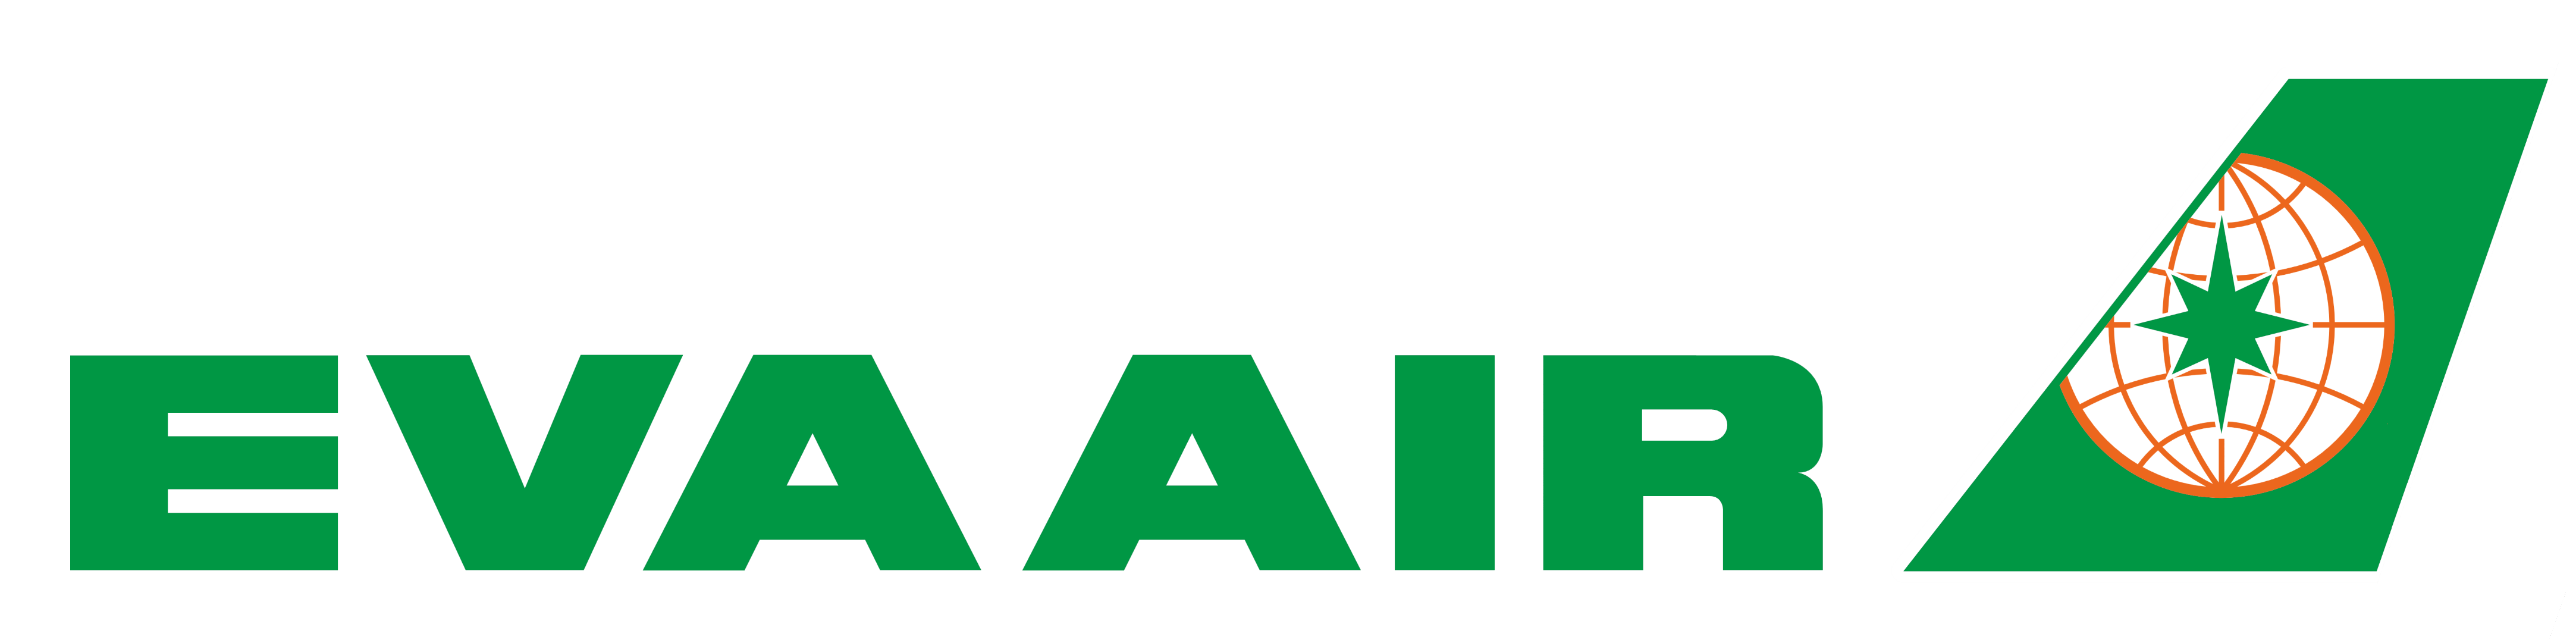 Image result for eva airlines latest logo